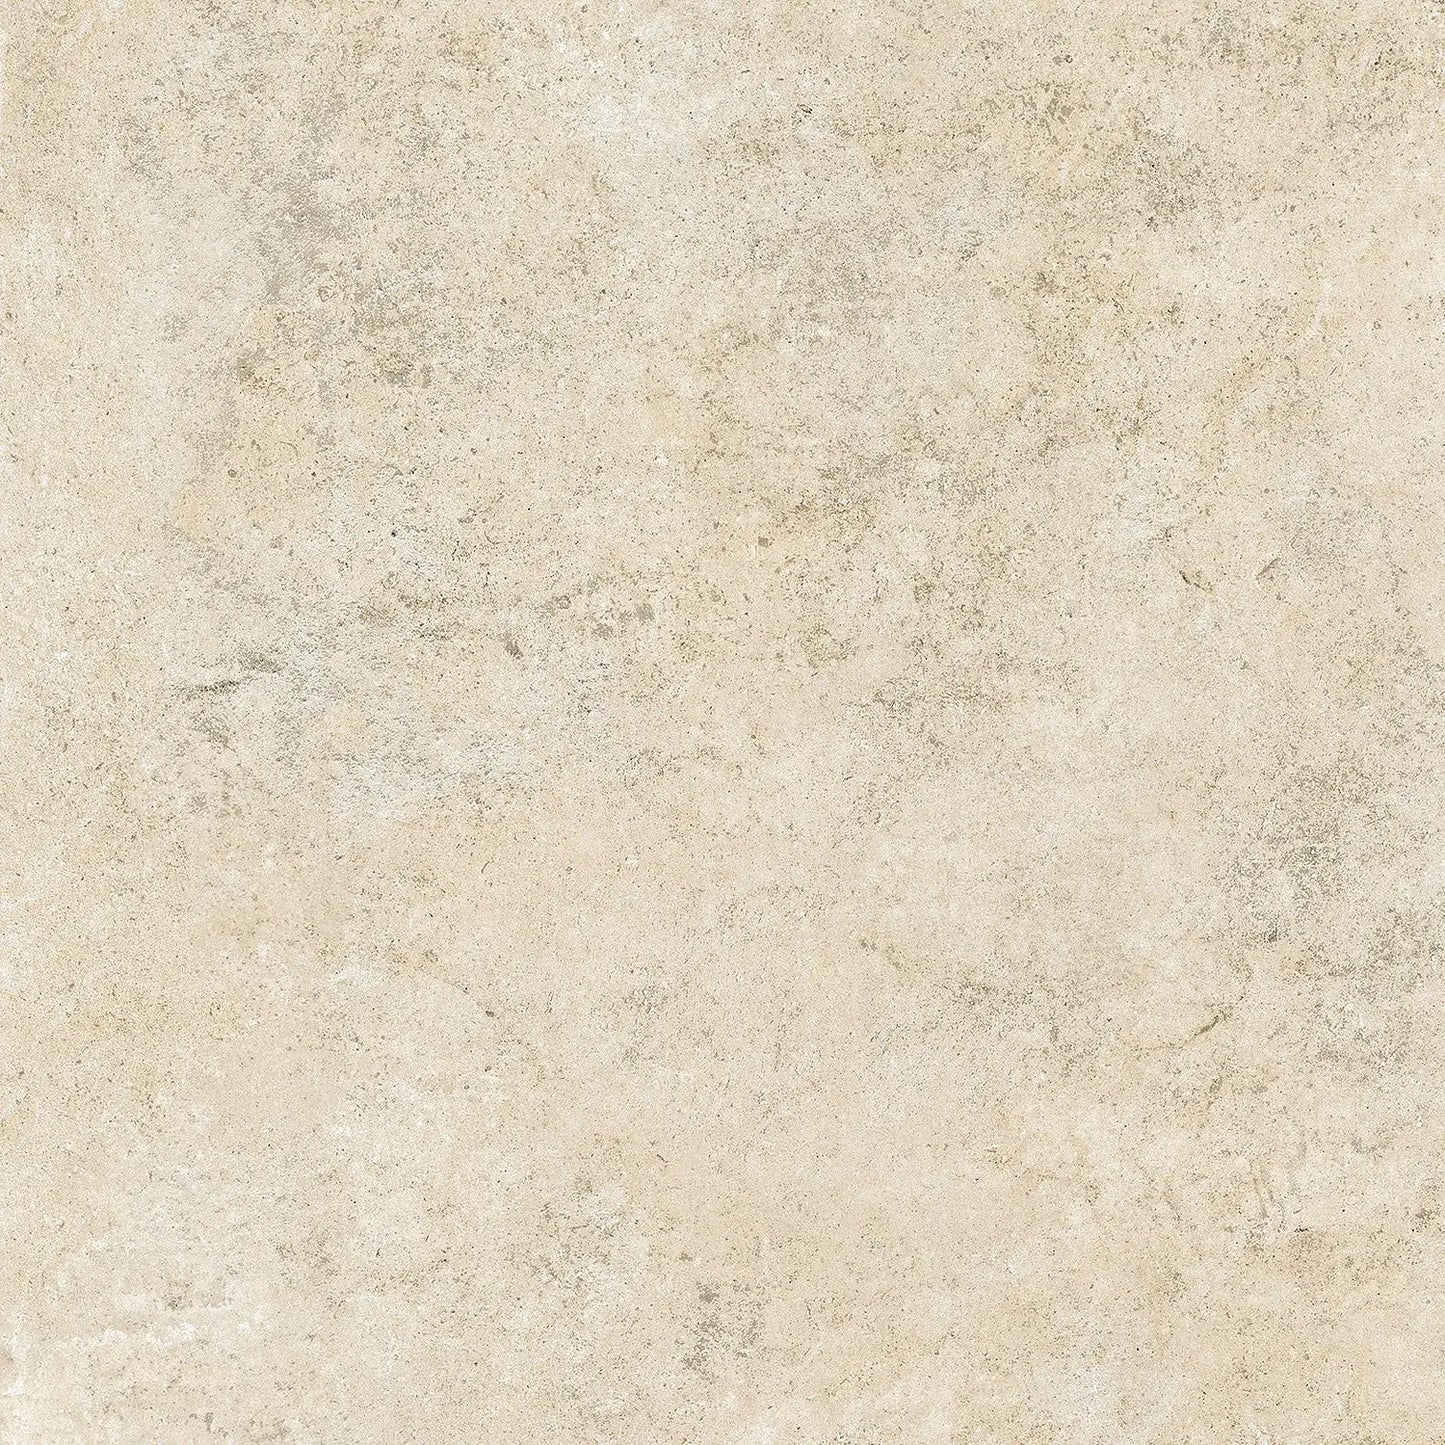 Tiles Century Glam beige matt Italy 120X120cm - stone look